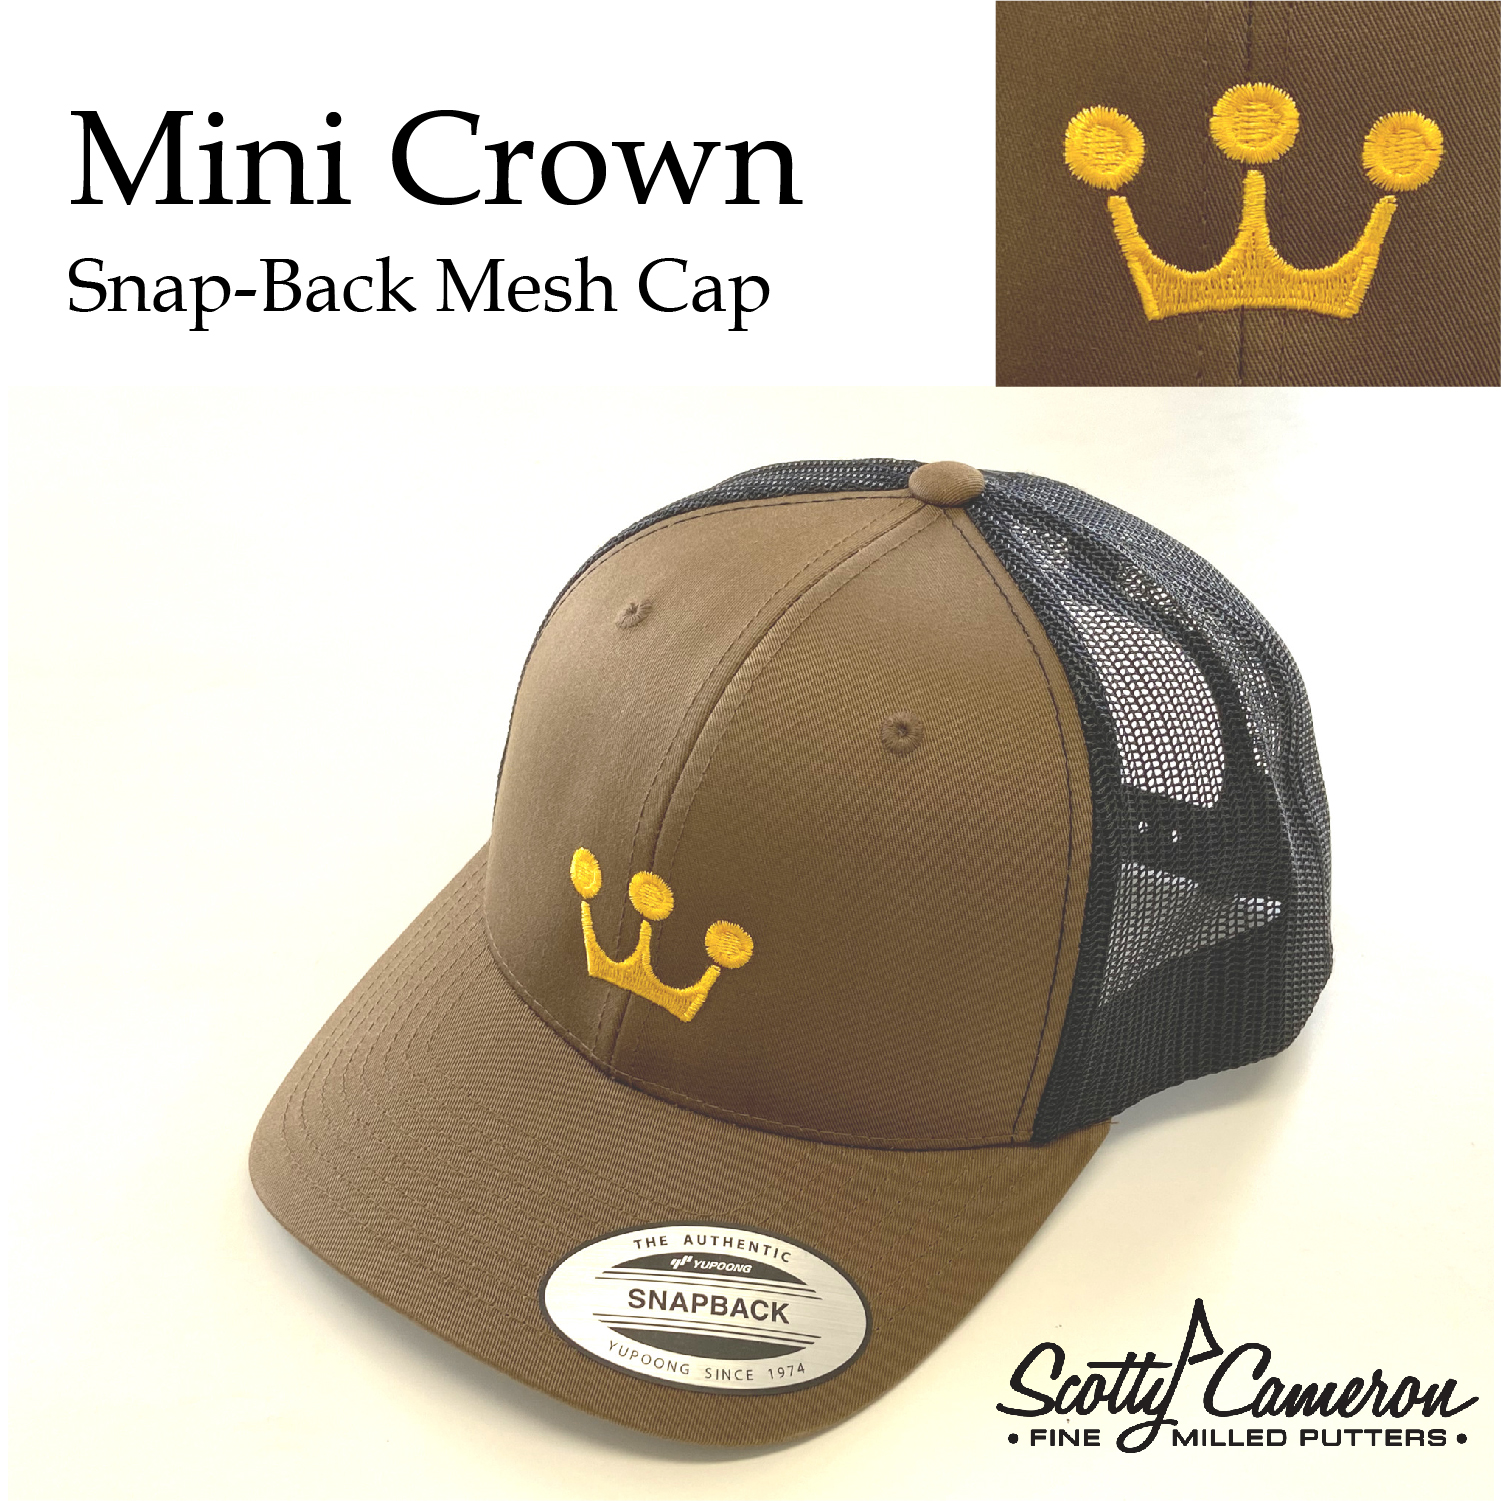 Scotty Cameron 2021 Helloween Mini Crown Snap-Back Mesh Cap Brown